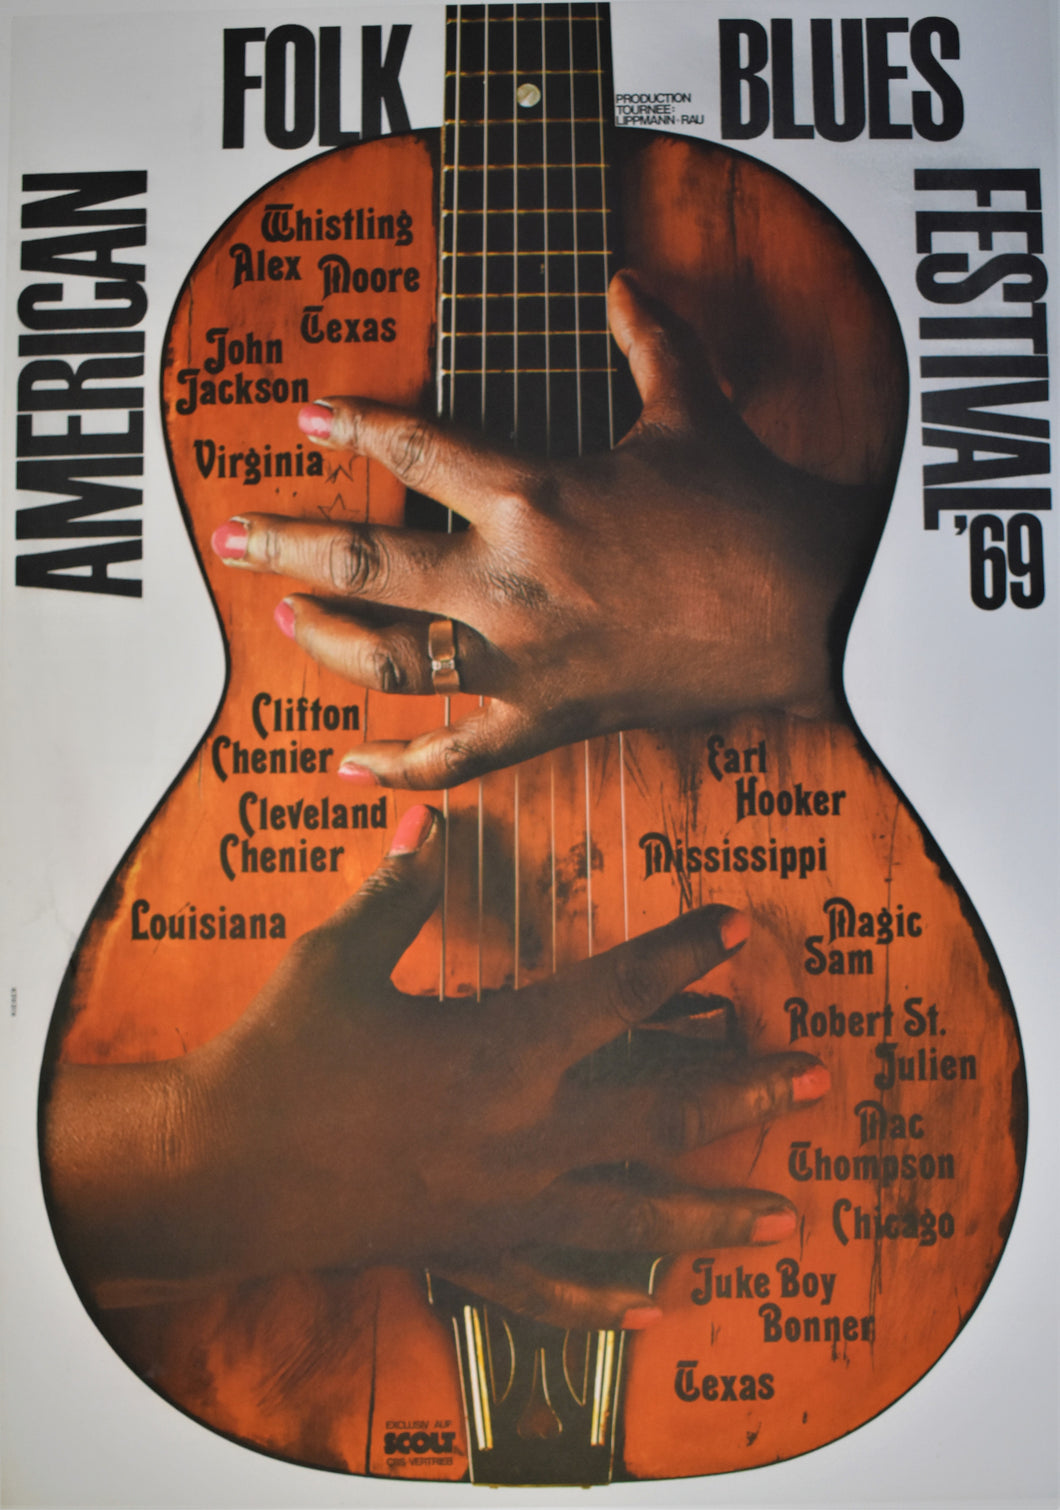 Original American Folks Blues Festival Poster 1969